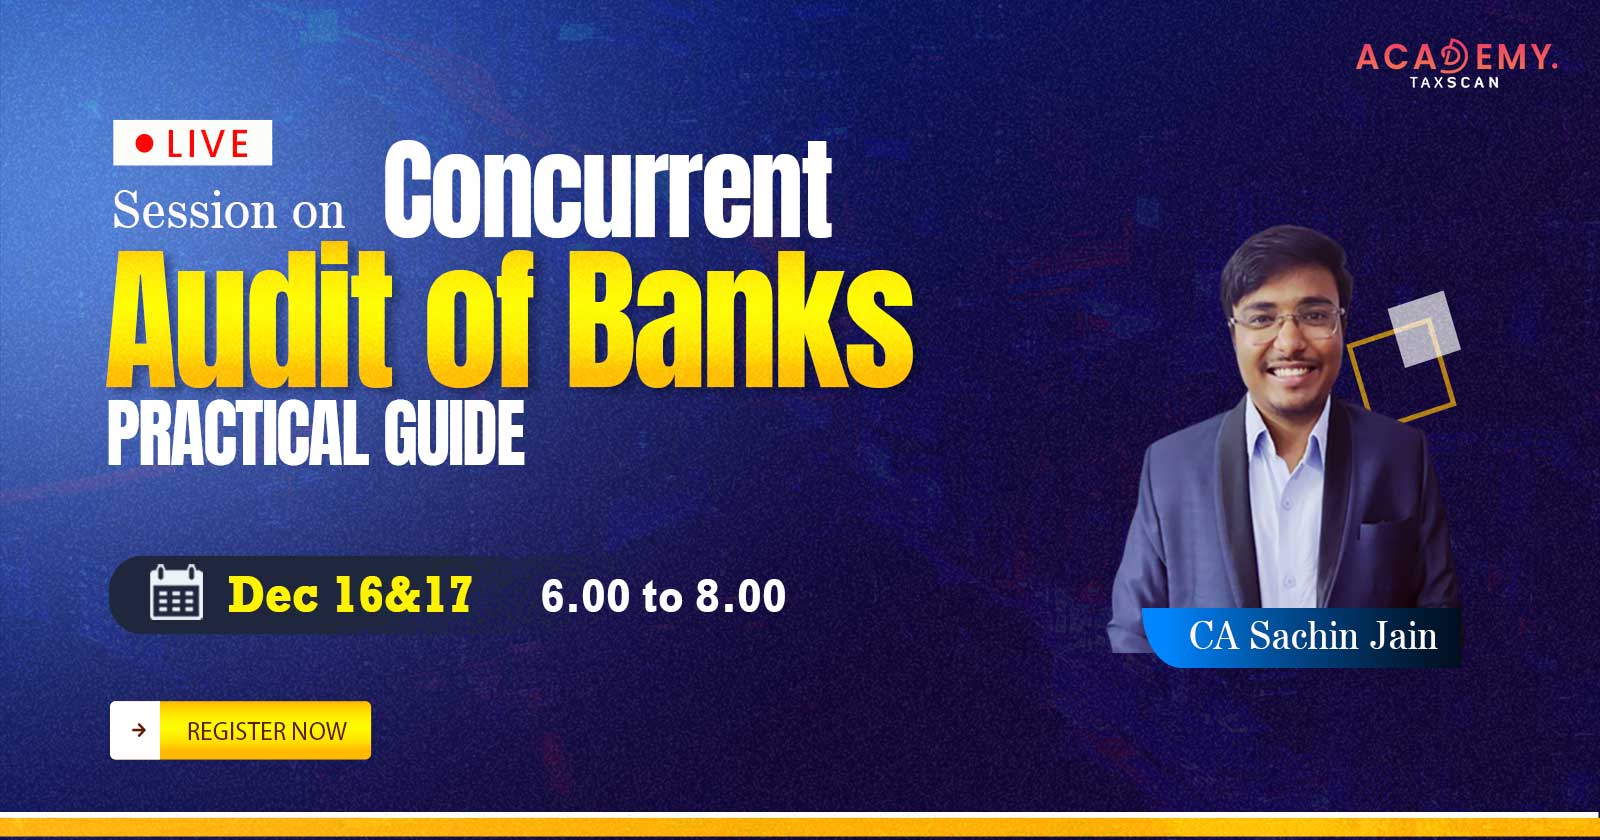 Live Session - Concurrent Audit of Banks Practical Guide - Concurrent Audit - Banks - Practical Guide - Banks Practical Guide - How to do concurrent audit of banks -Certification - Taxscan Academy